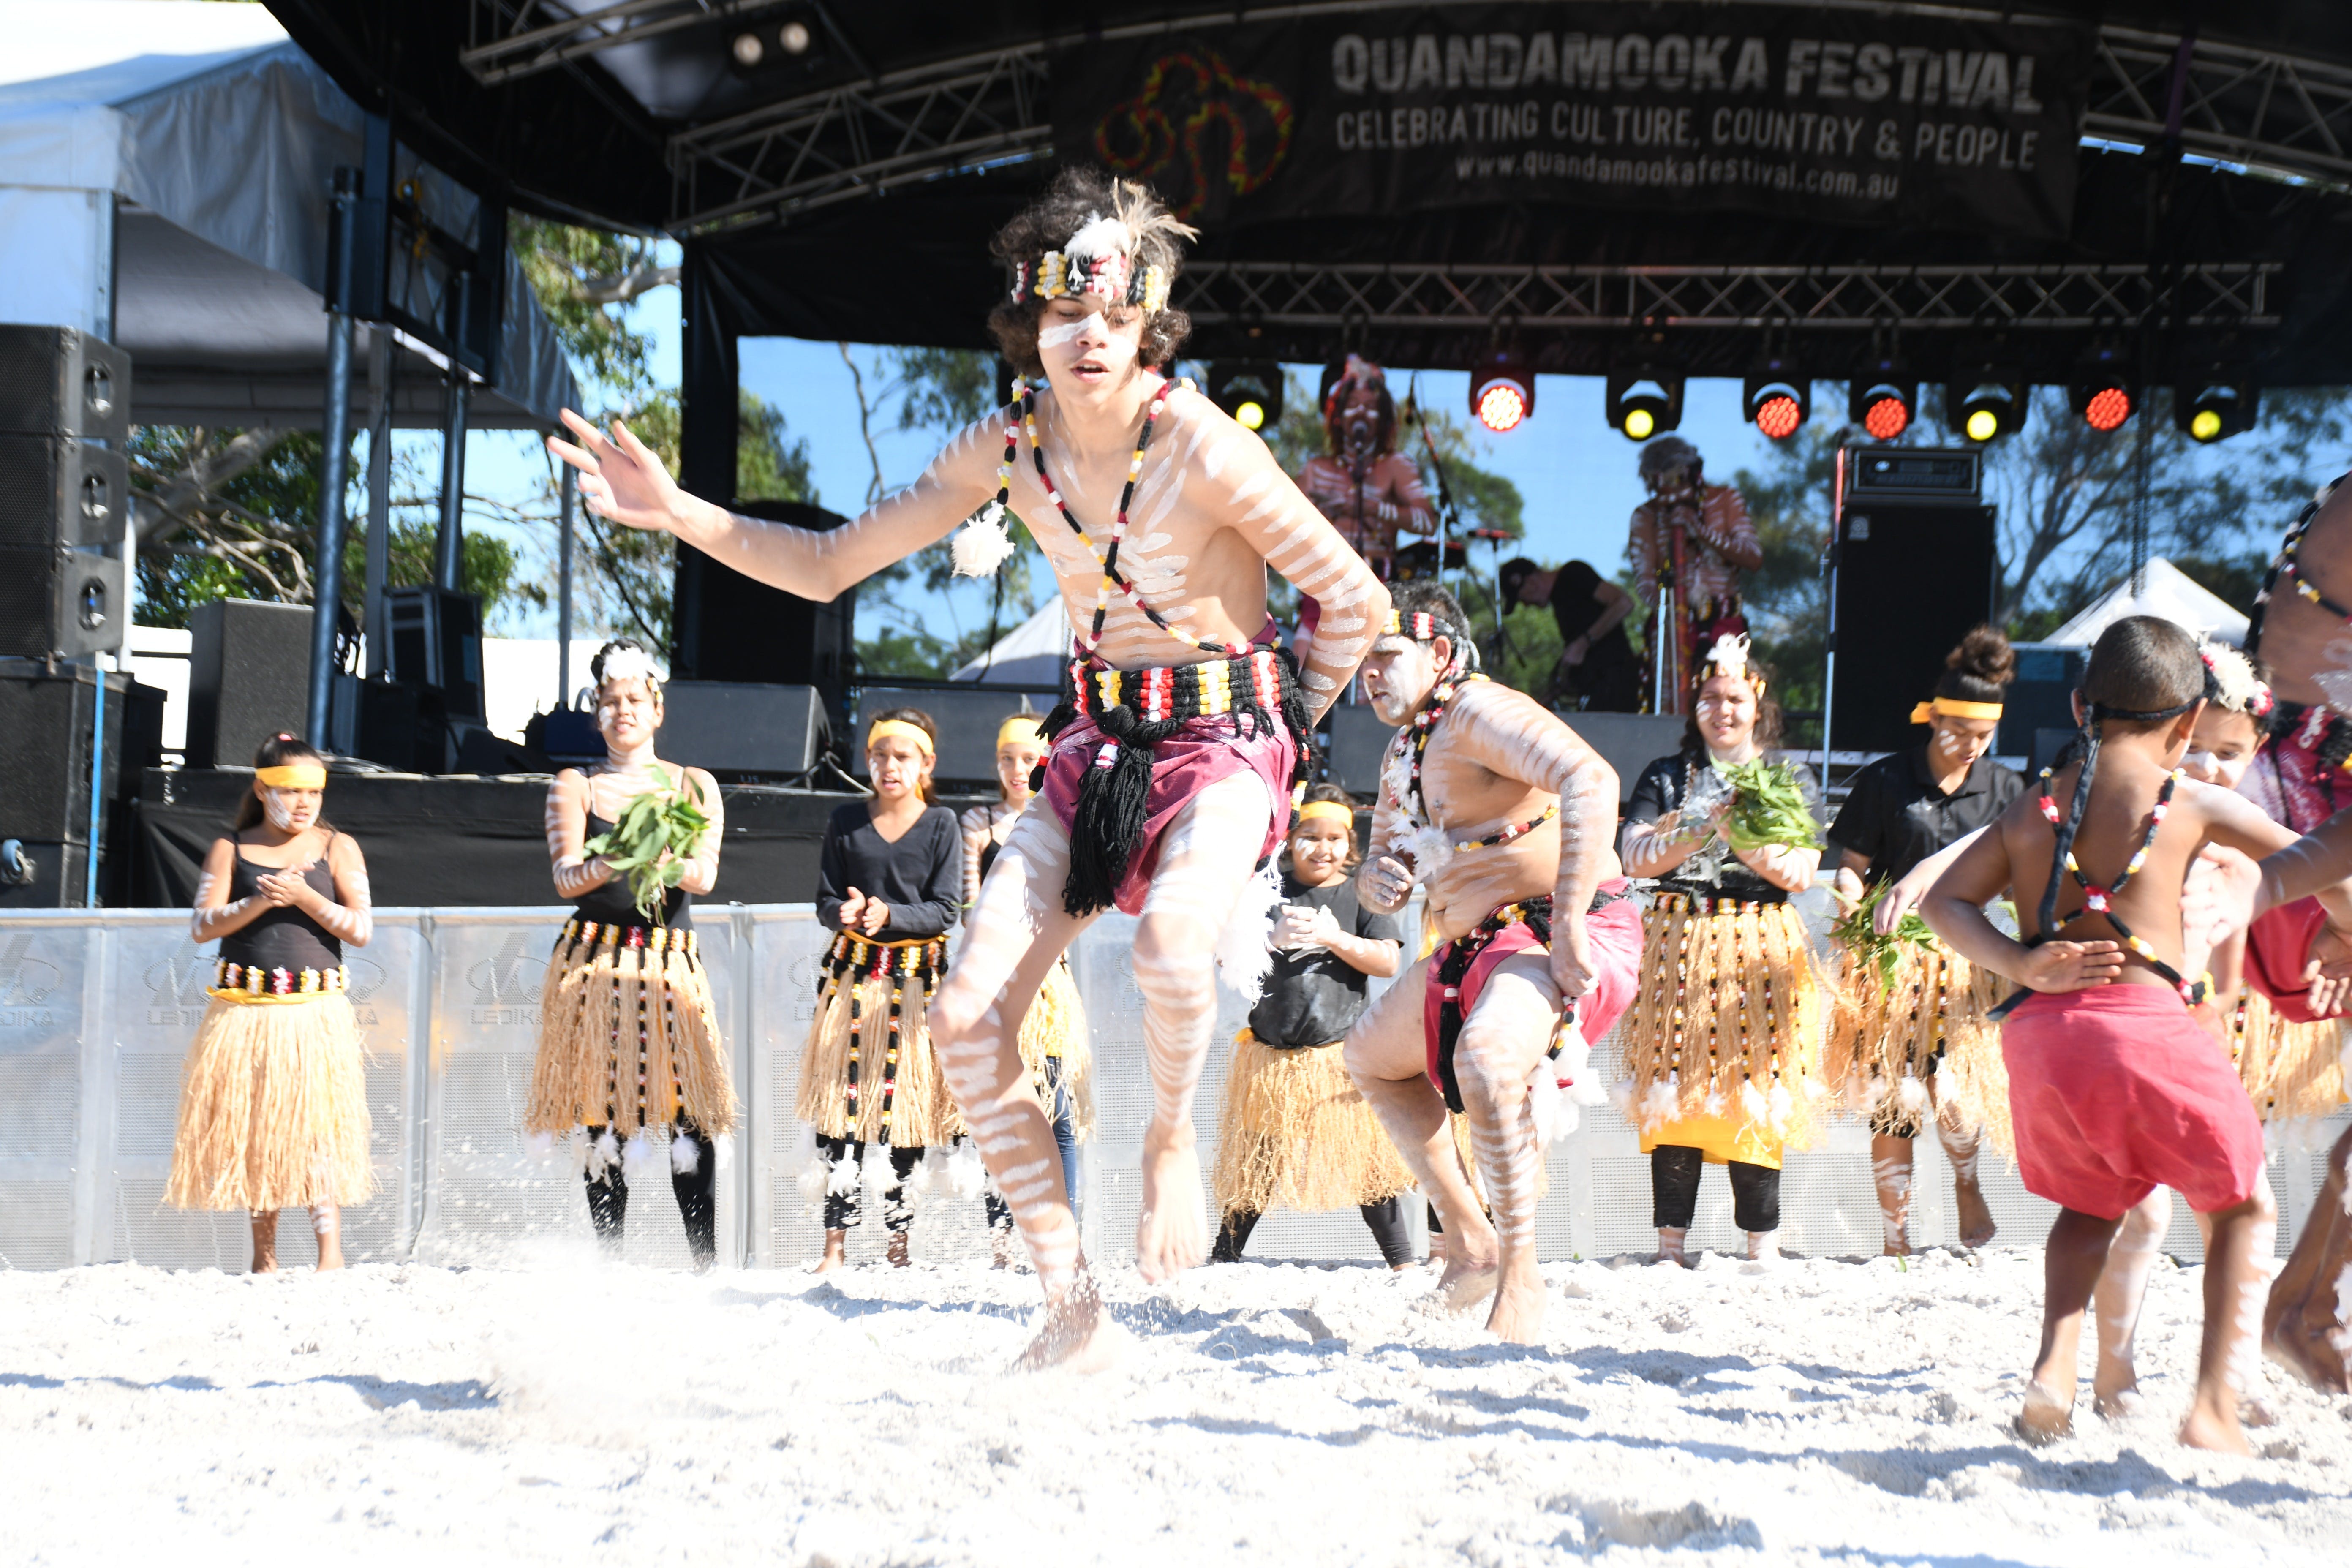 Quandamooka Festival 2021 - Tourism Canberra